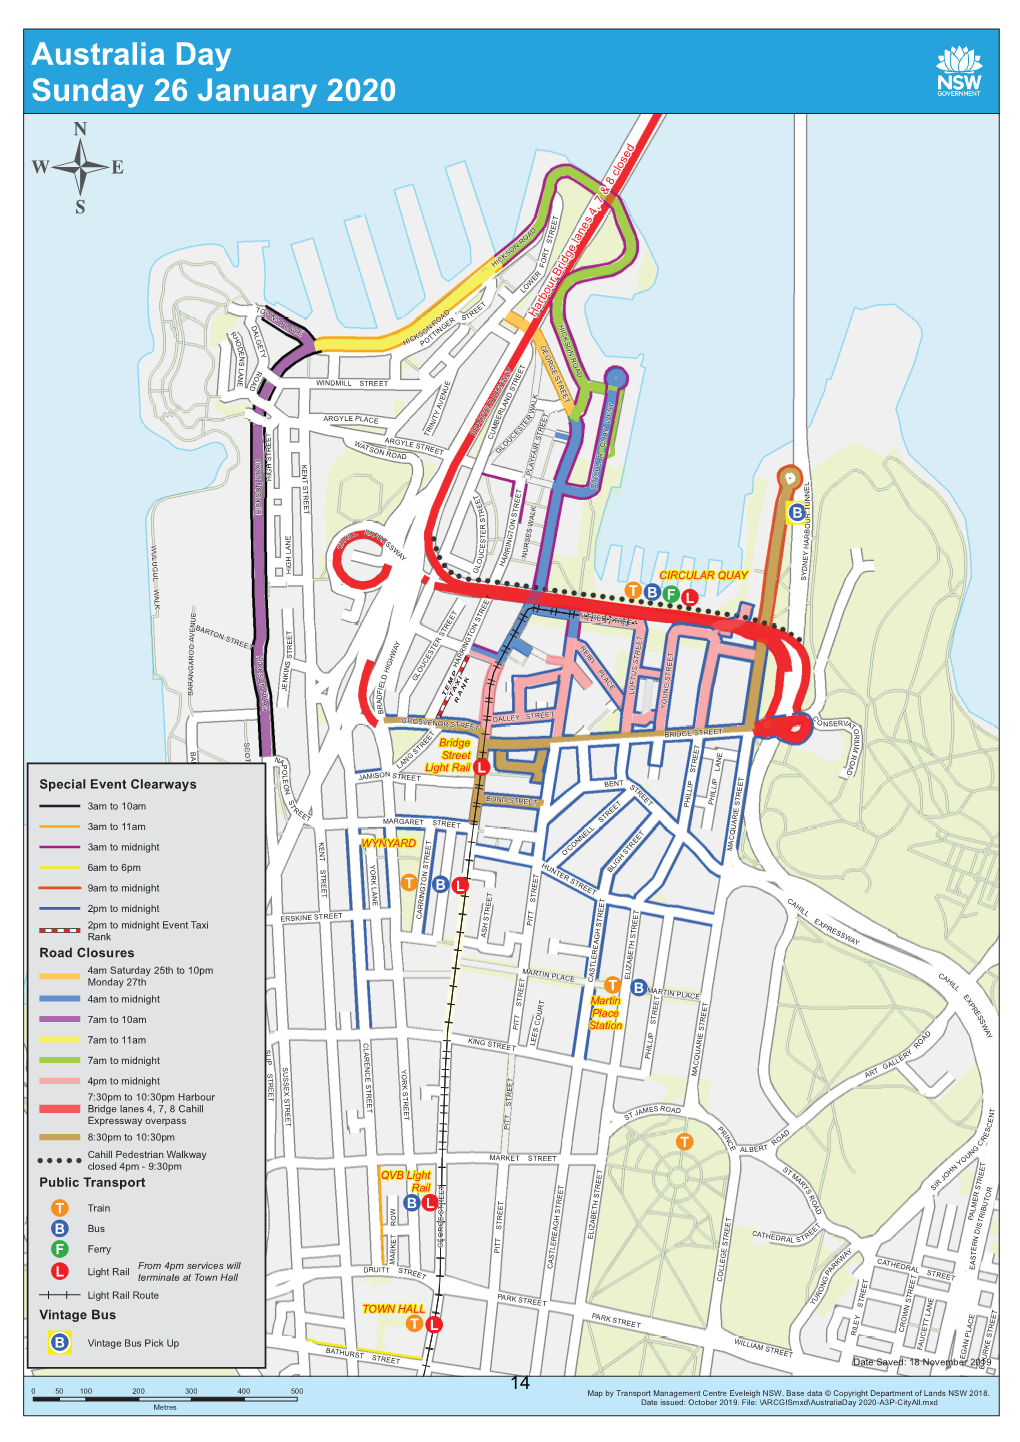 Sydney Harbour Bridge Lane Closures: 7:30Pm – 10:30Pm: Lanes 4, 7, 8